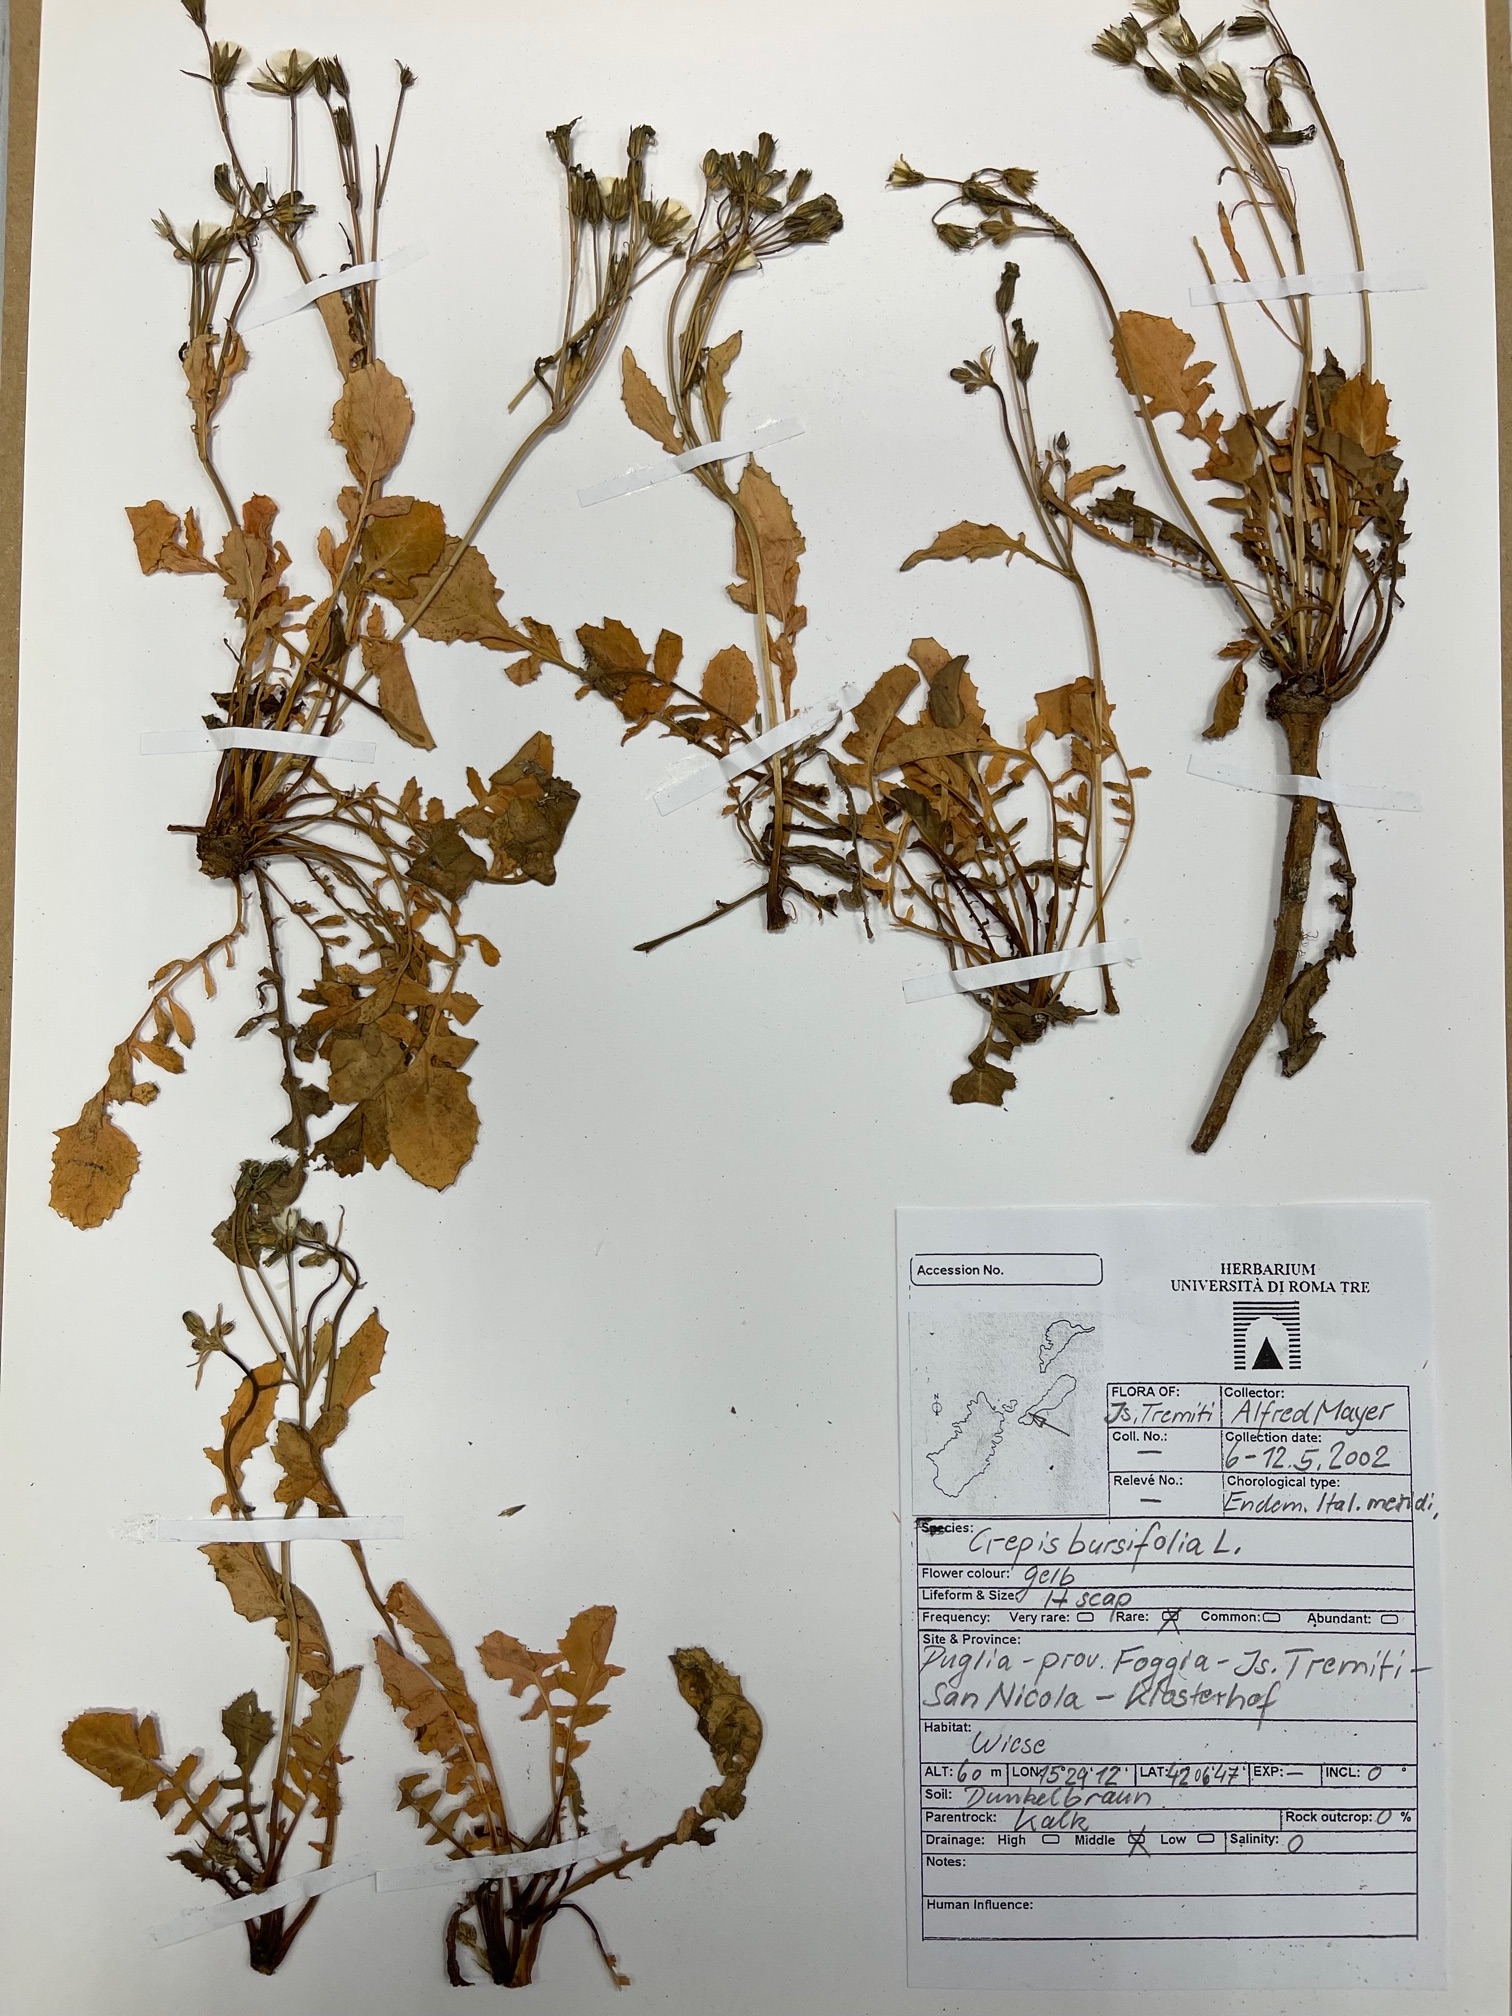 crepis bursifolia alfred mayer tremiti inseln italien.jpg